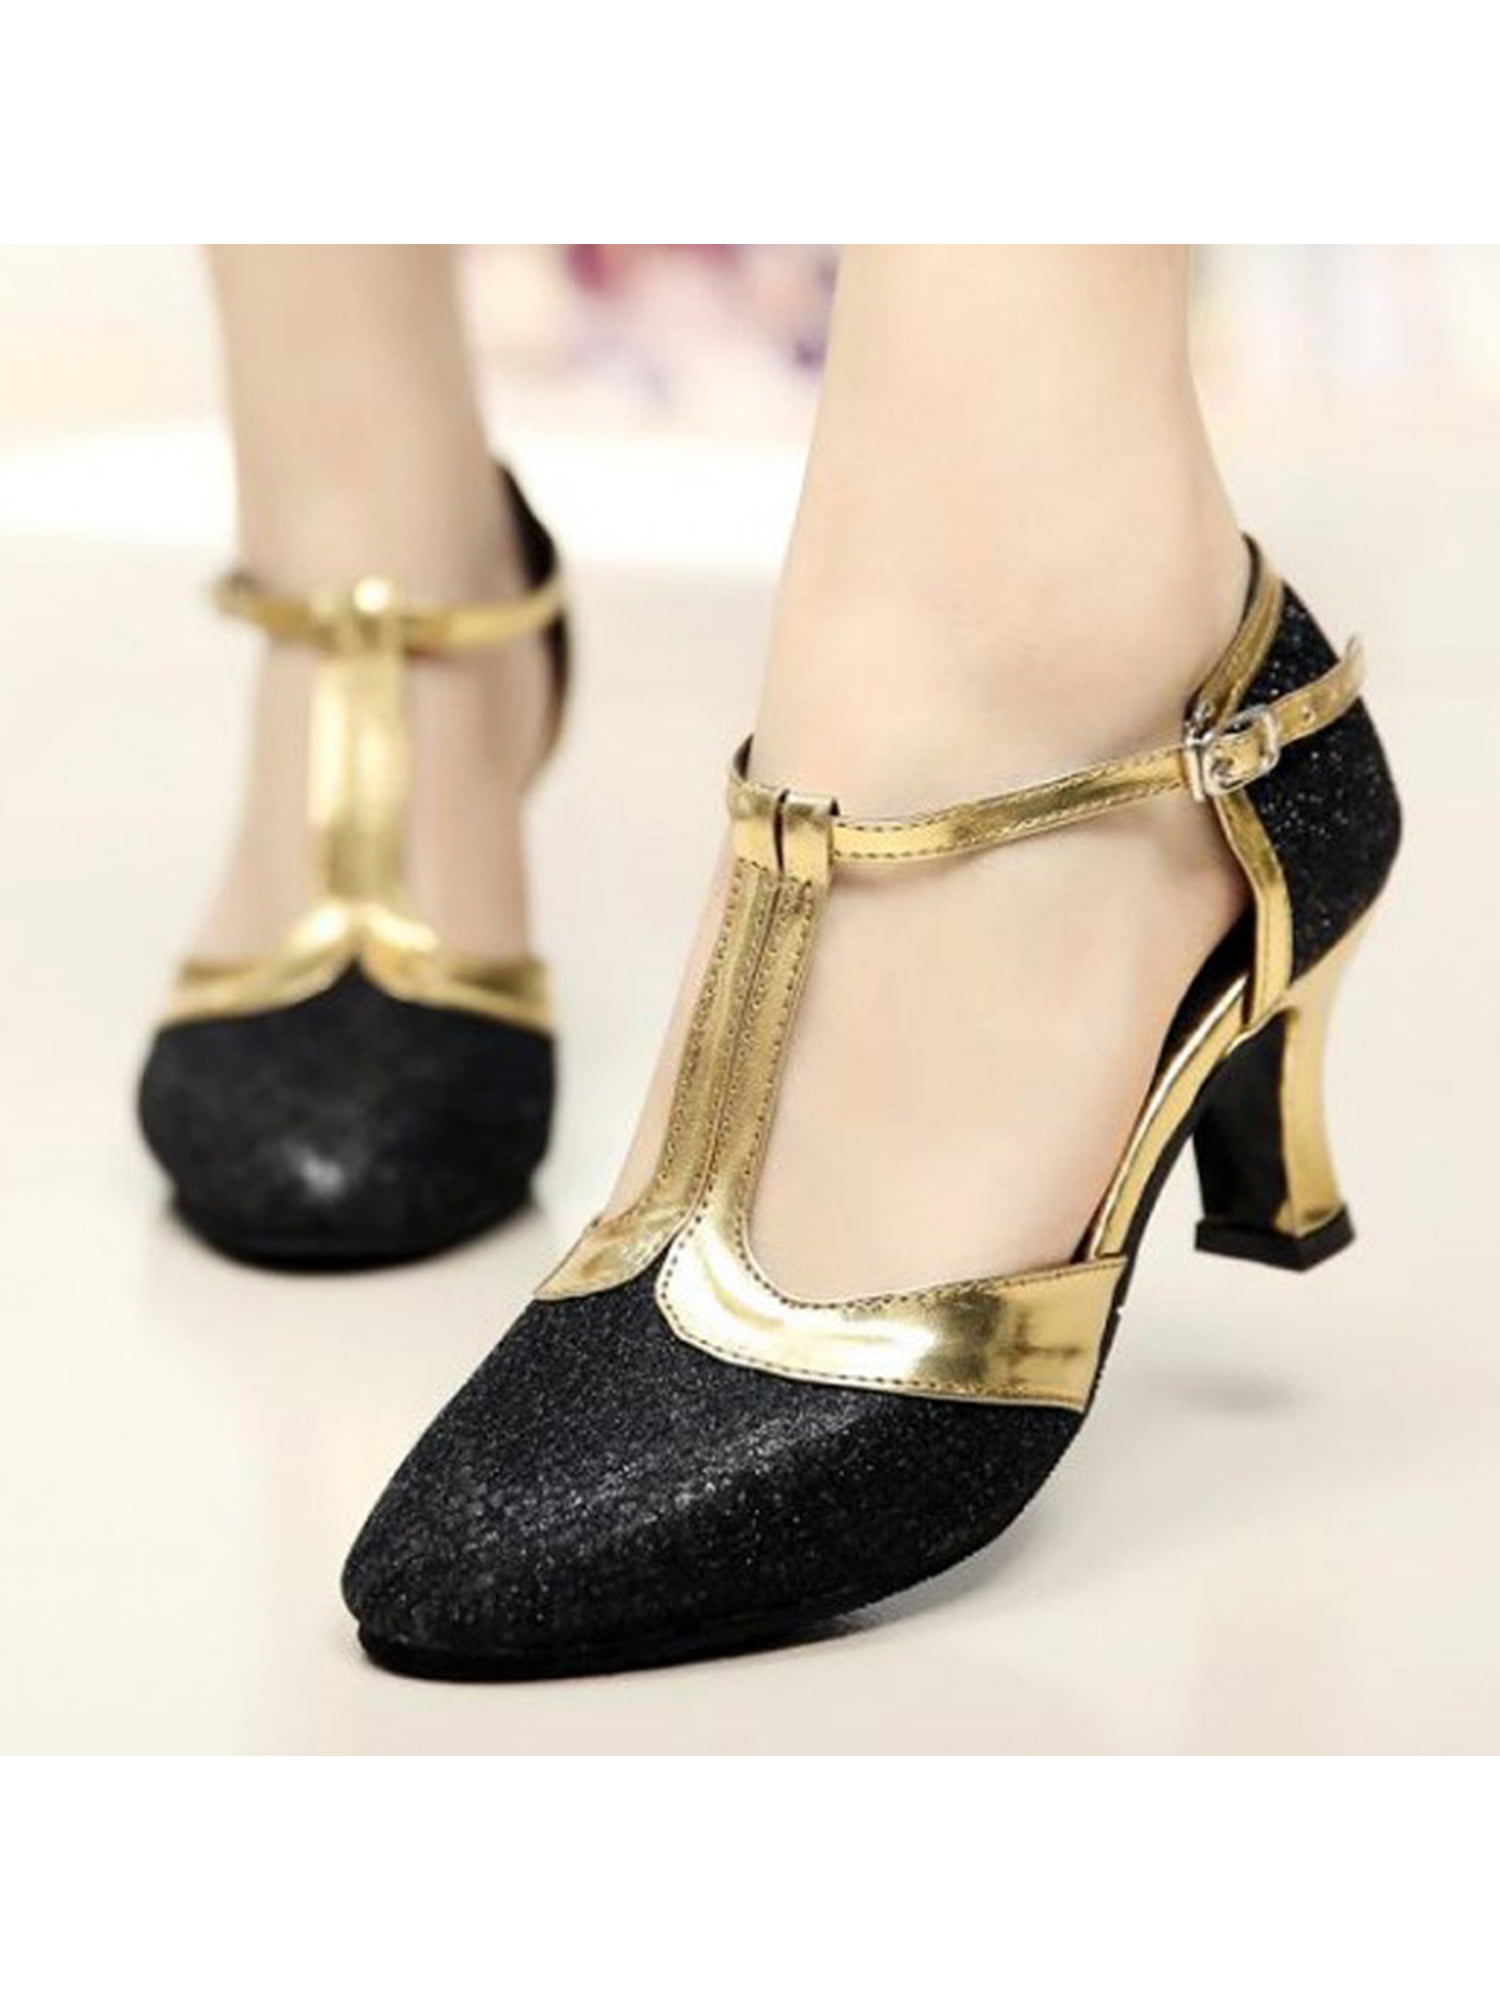 Women Shoes T-strap Latin Shoe Closed Toe Sandals Comfort Glitter Chunky Heels Pumps Soft Sole Fashion Black 5.5 Walmart.com